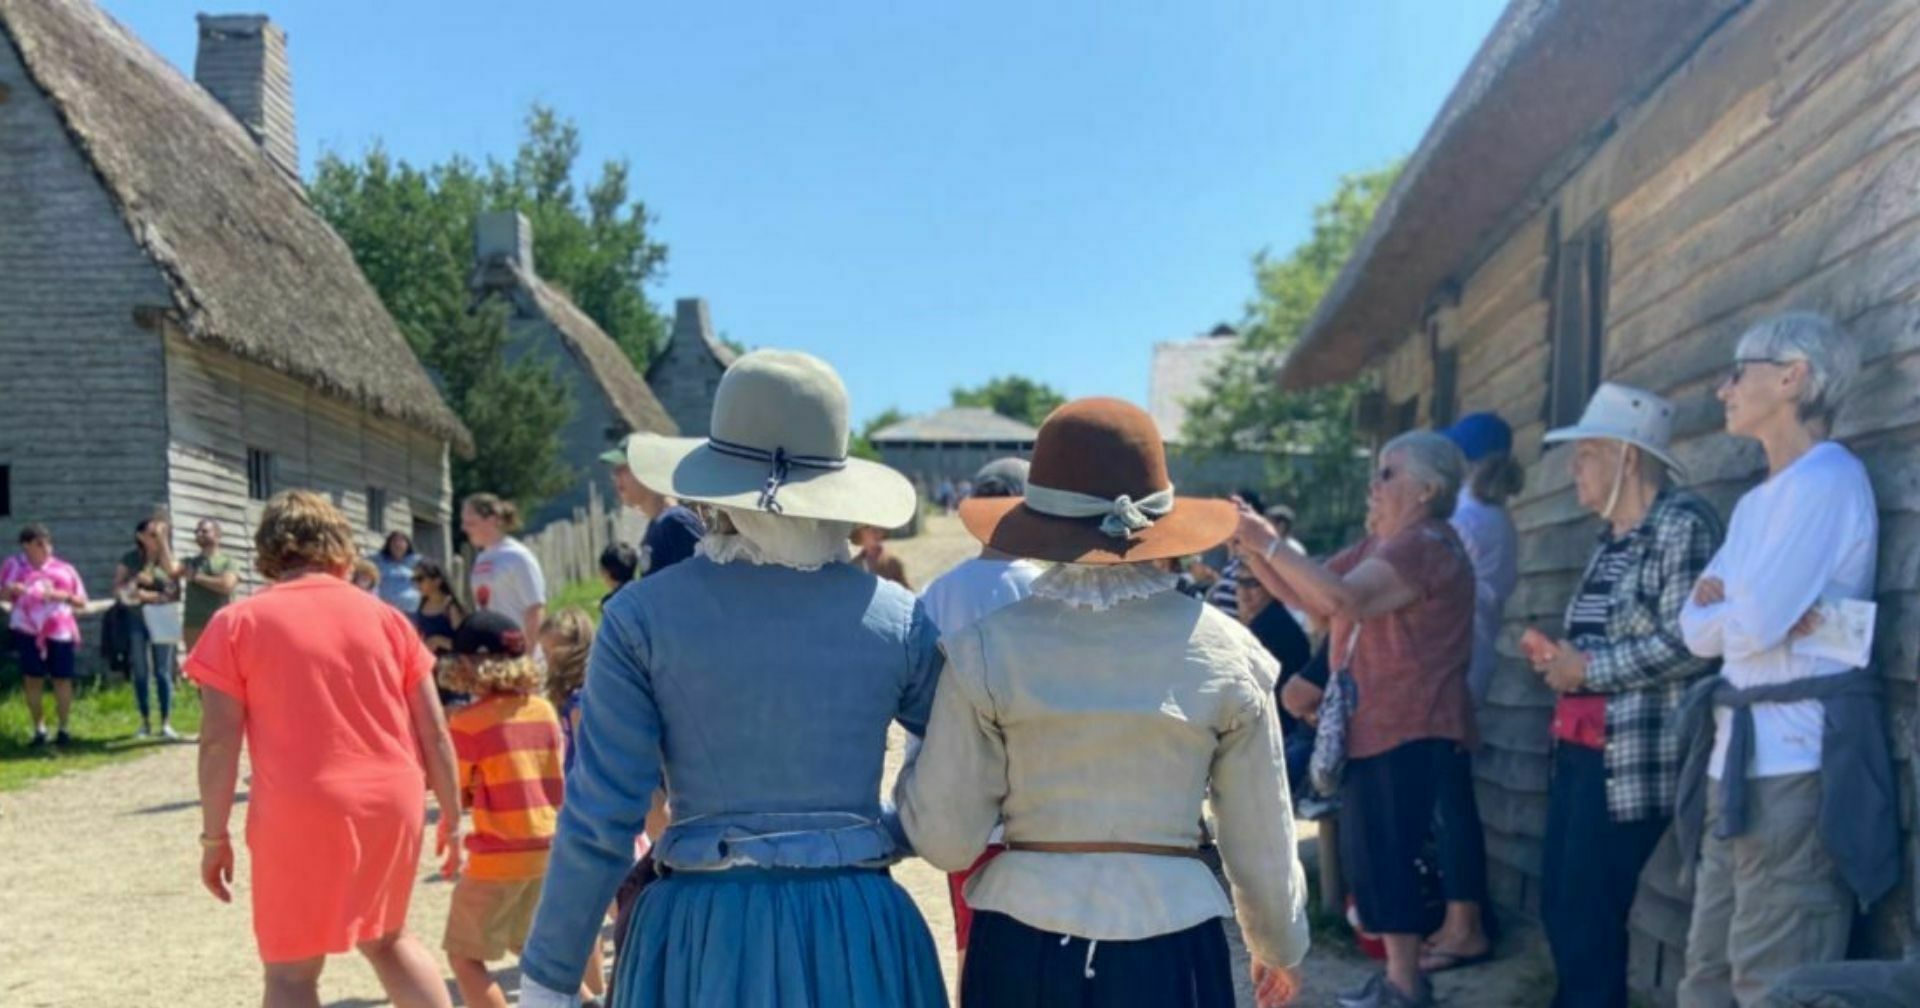 Two pilgrims walk through crowd while linking arms